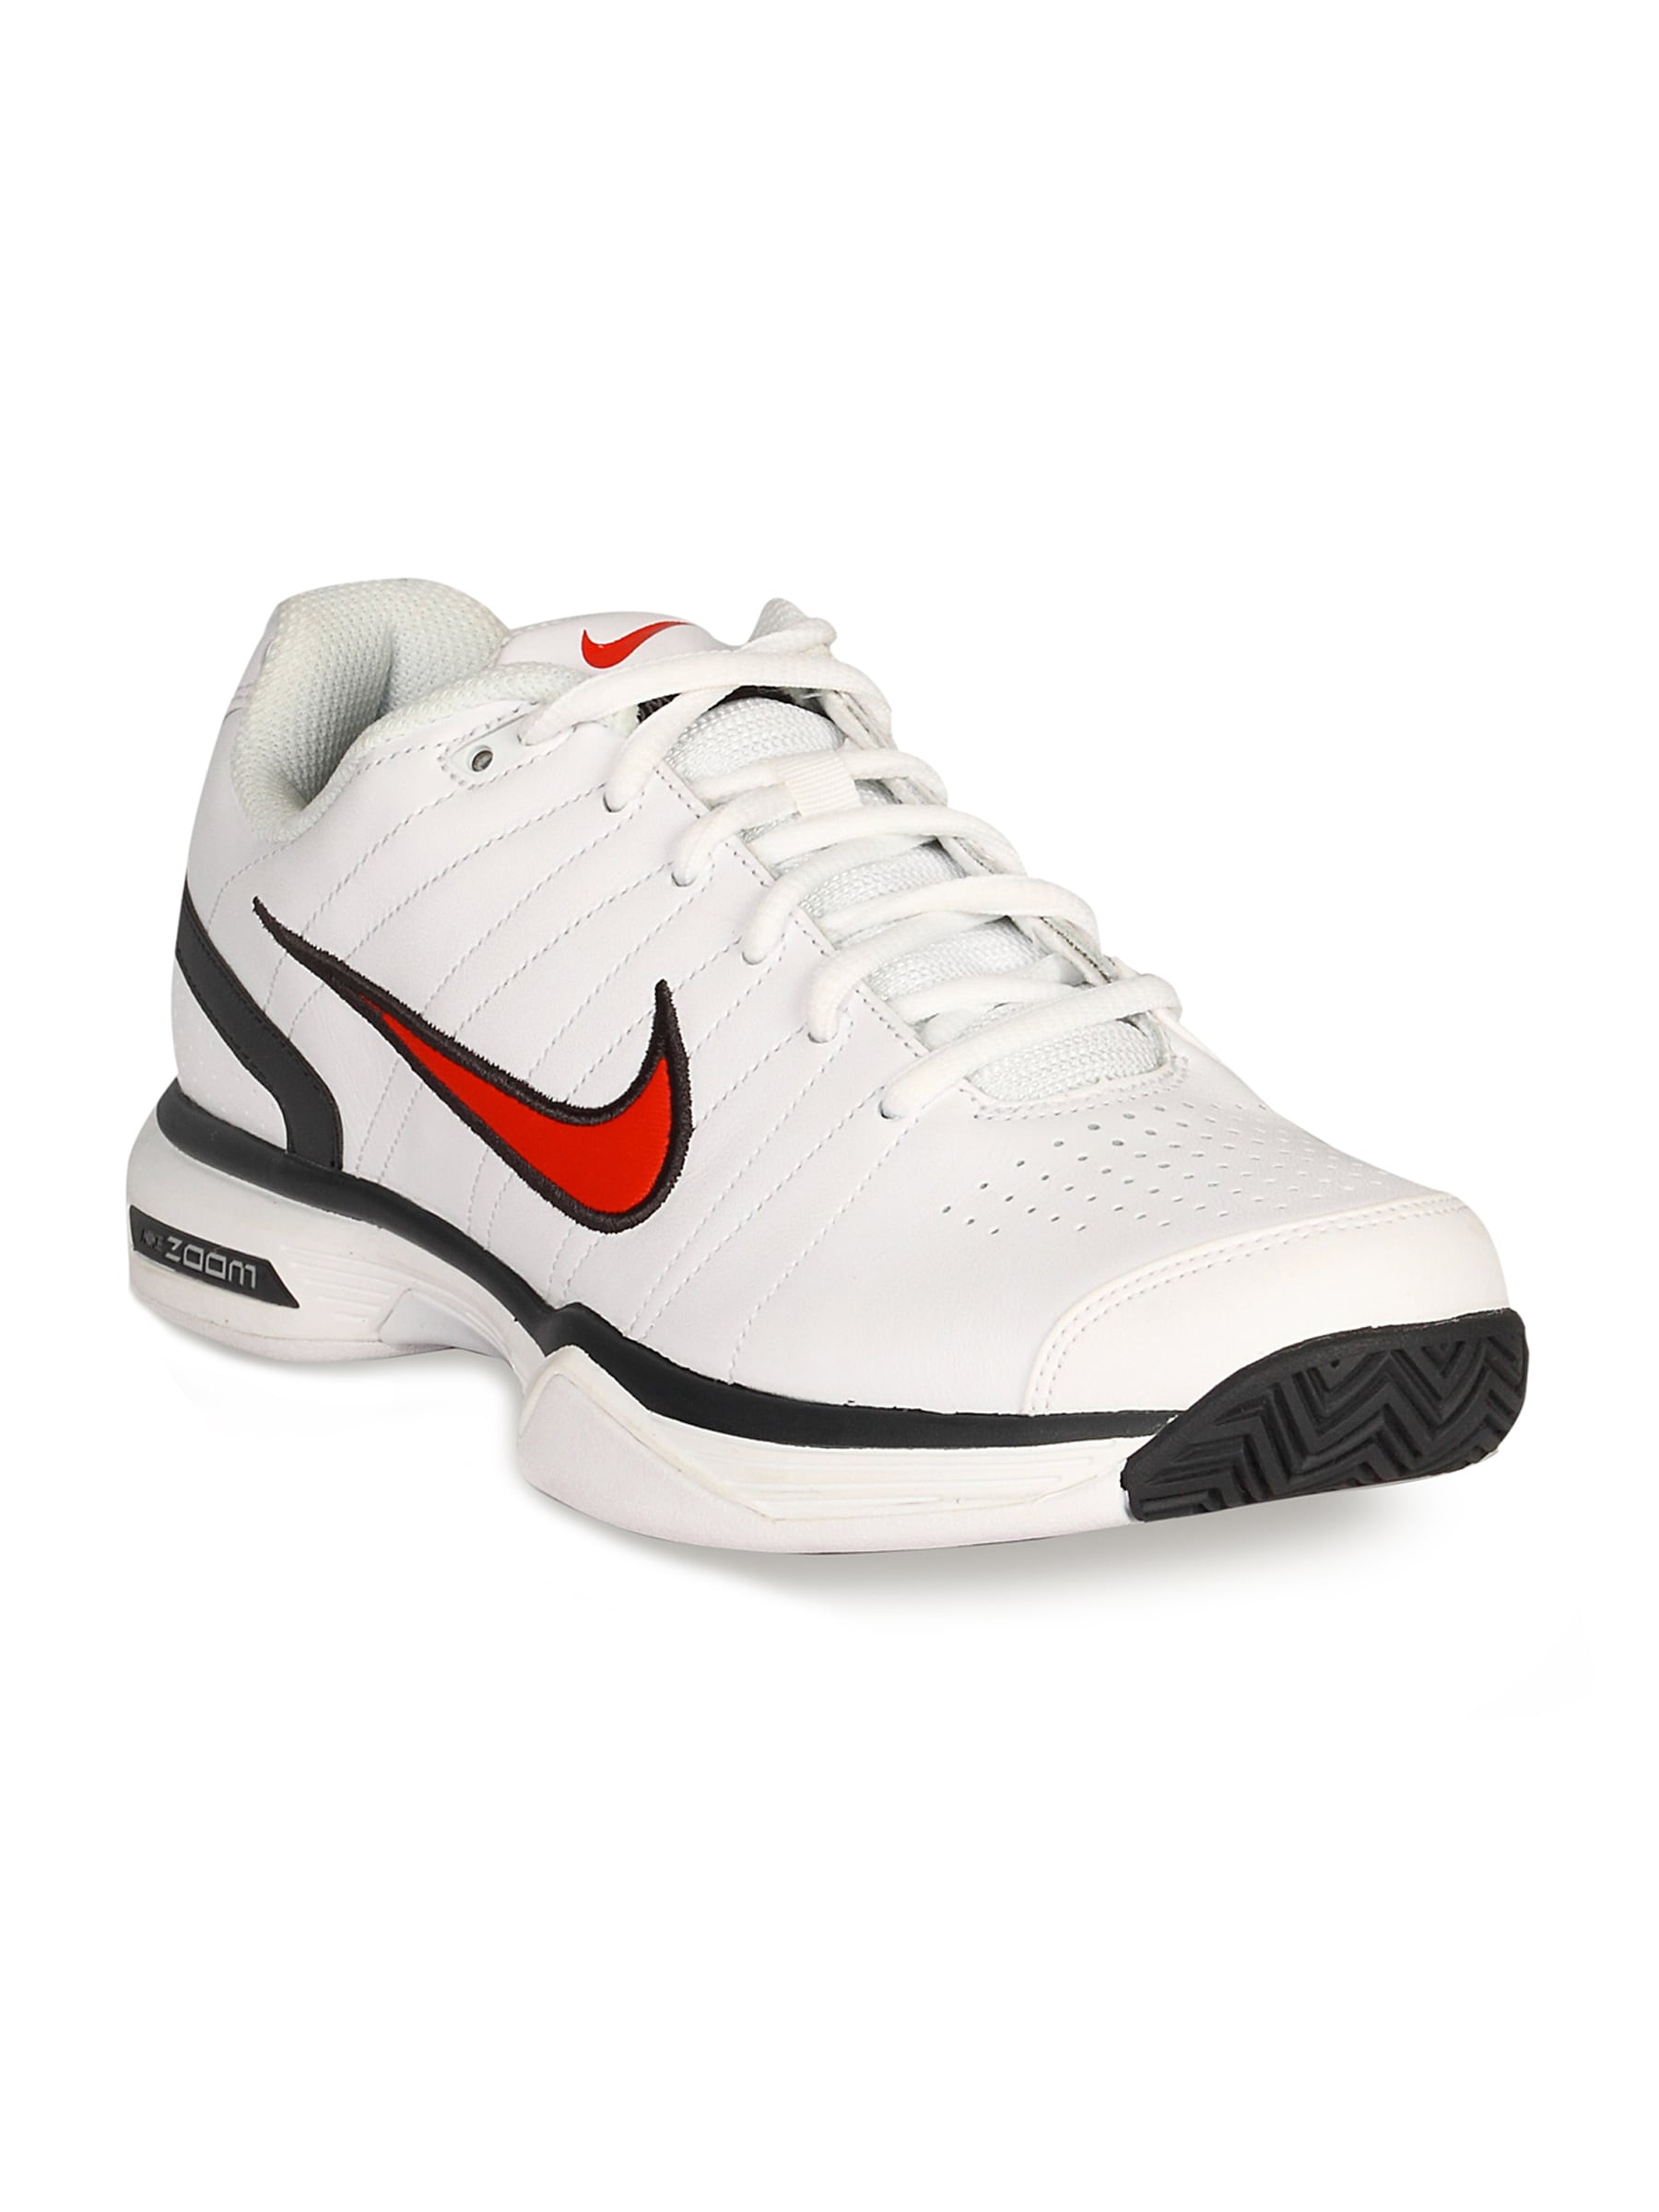 Nike Men's Vapour Club White Red Shoe